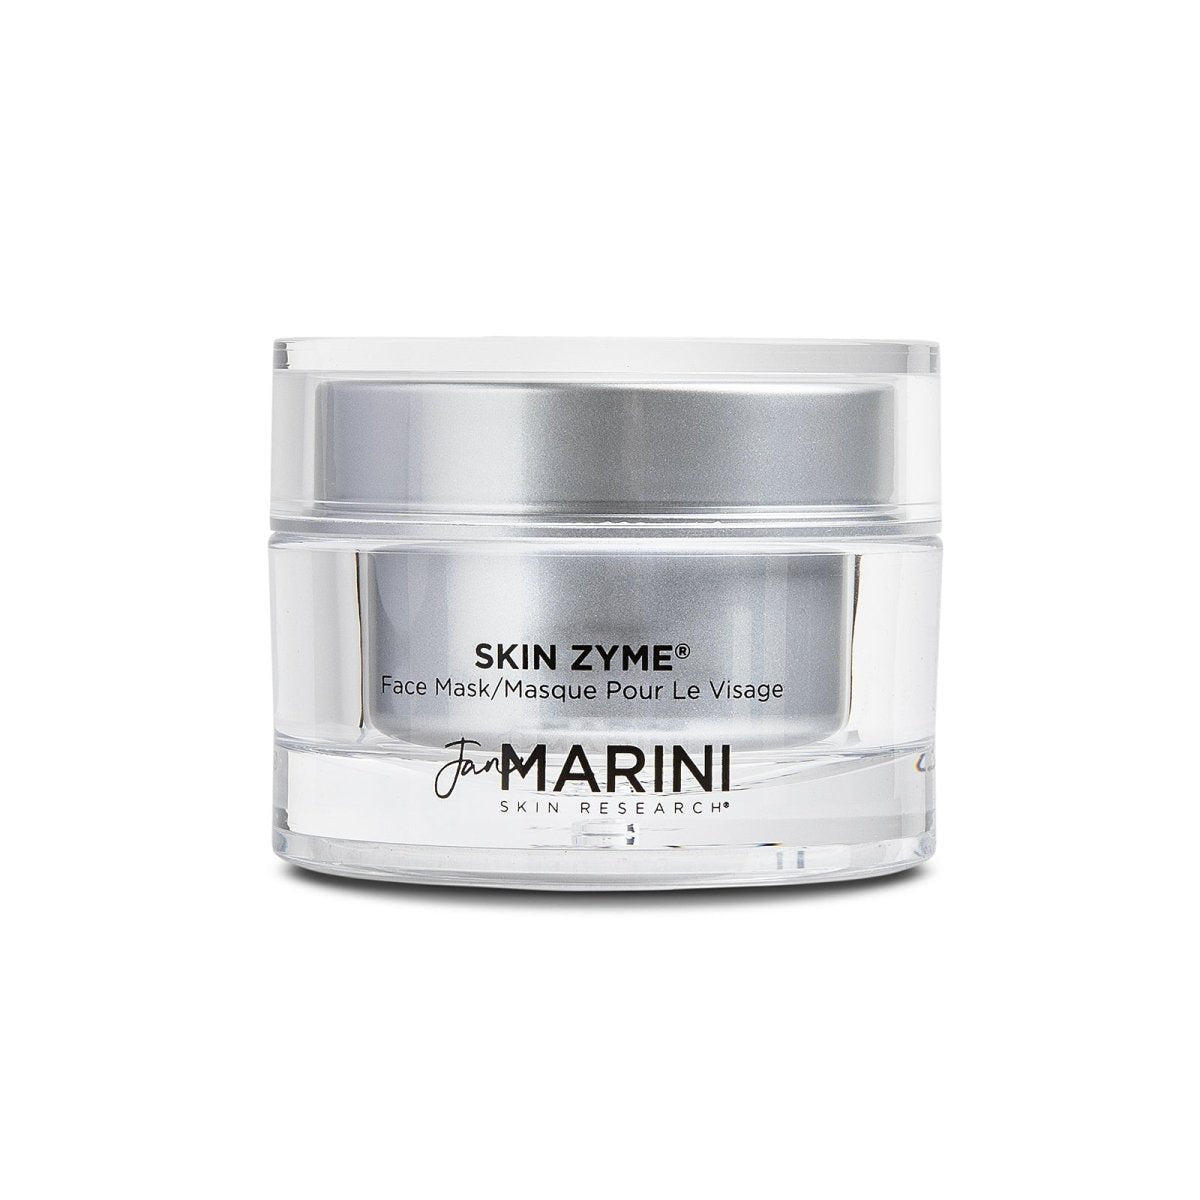 Jan Marini Skin Zyme® Face Mask - SkincareEssentials